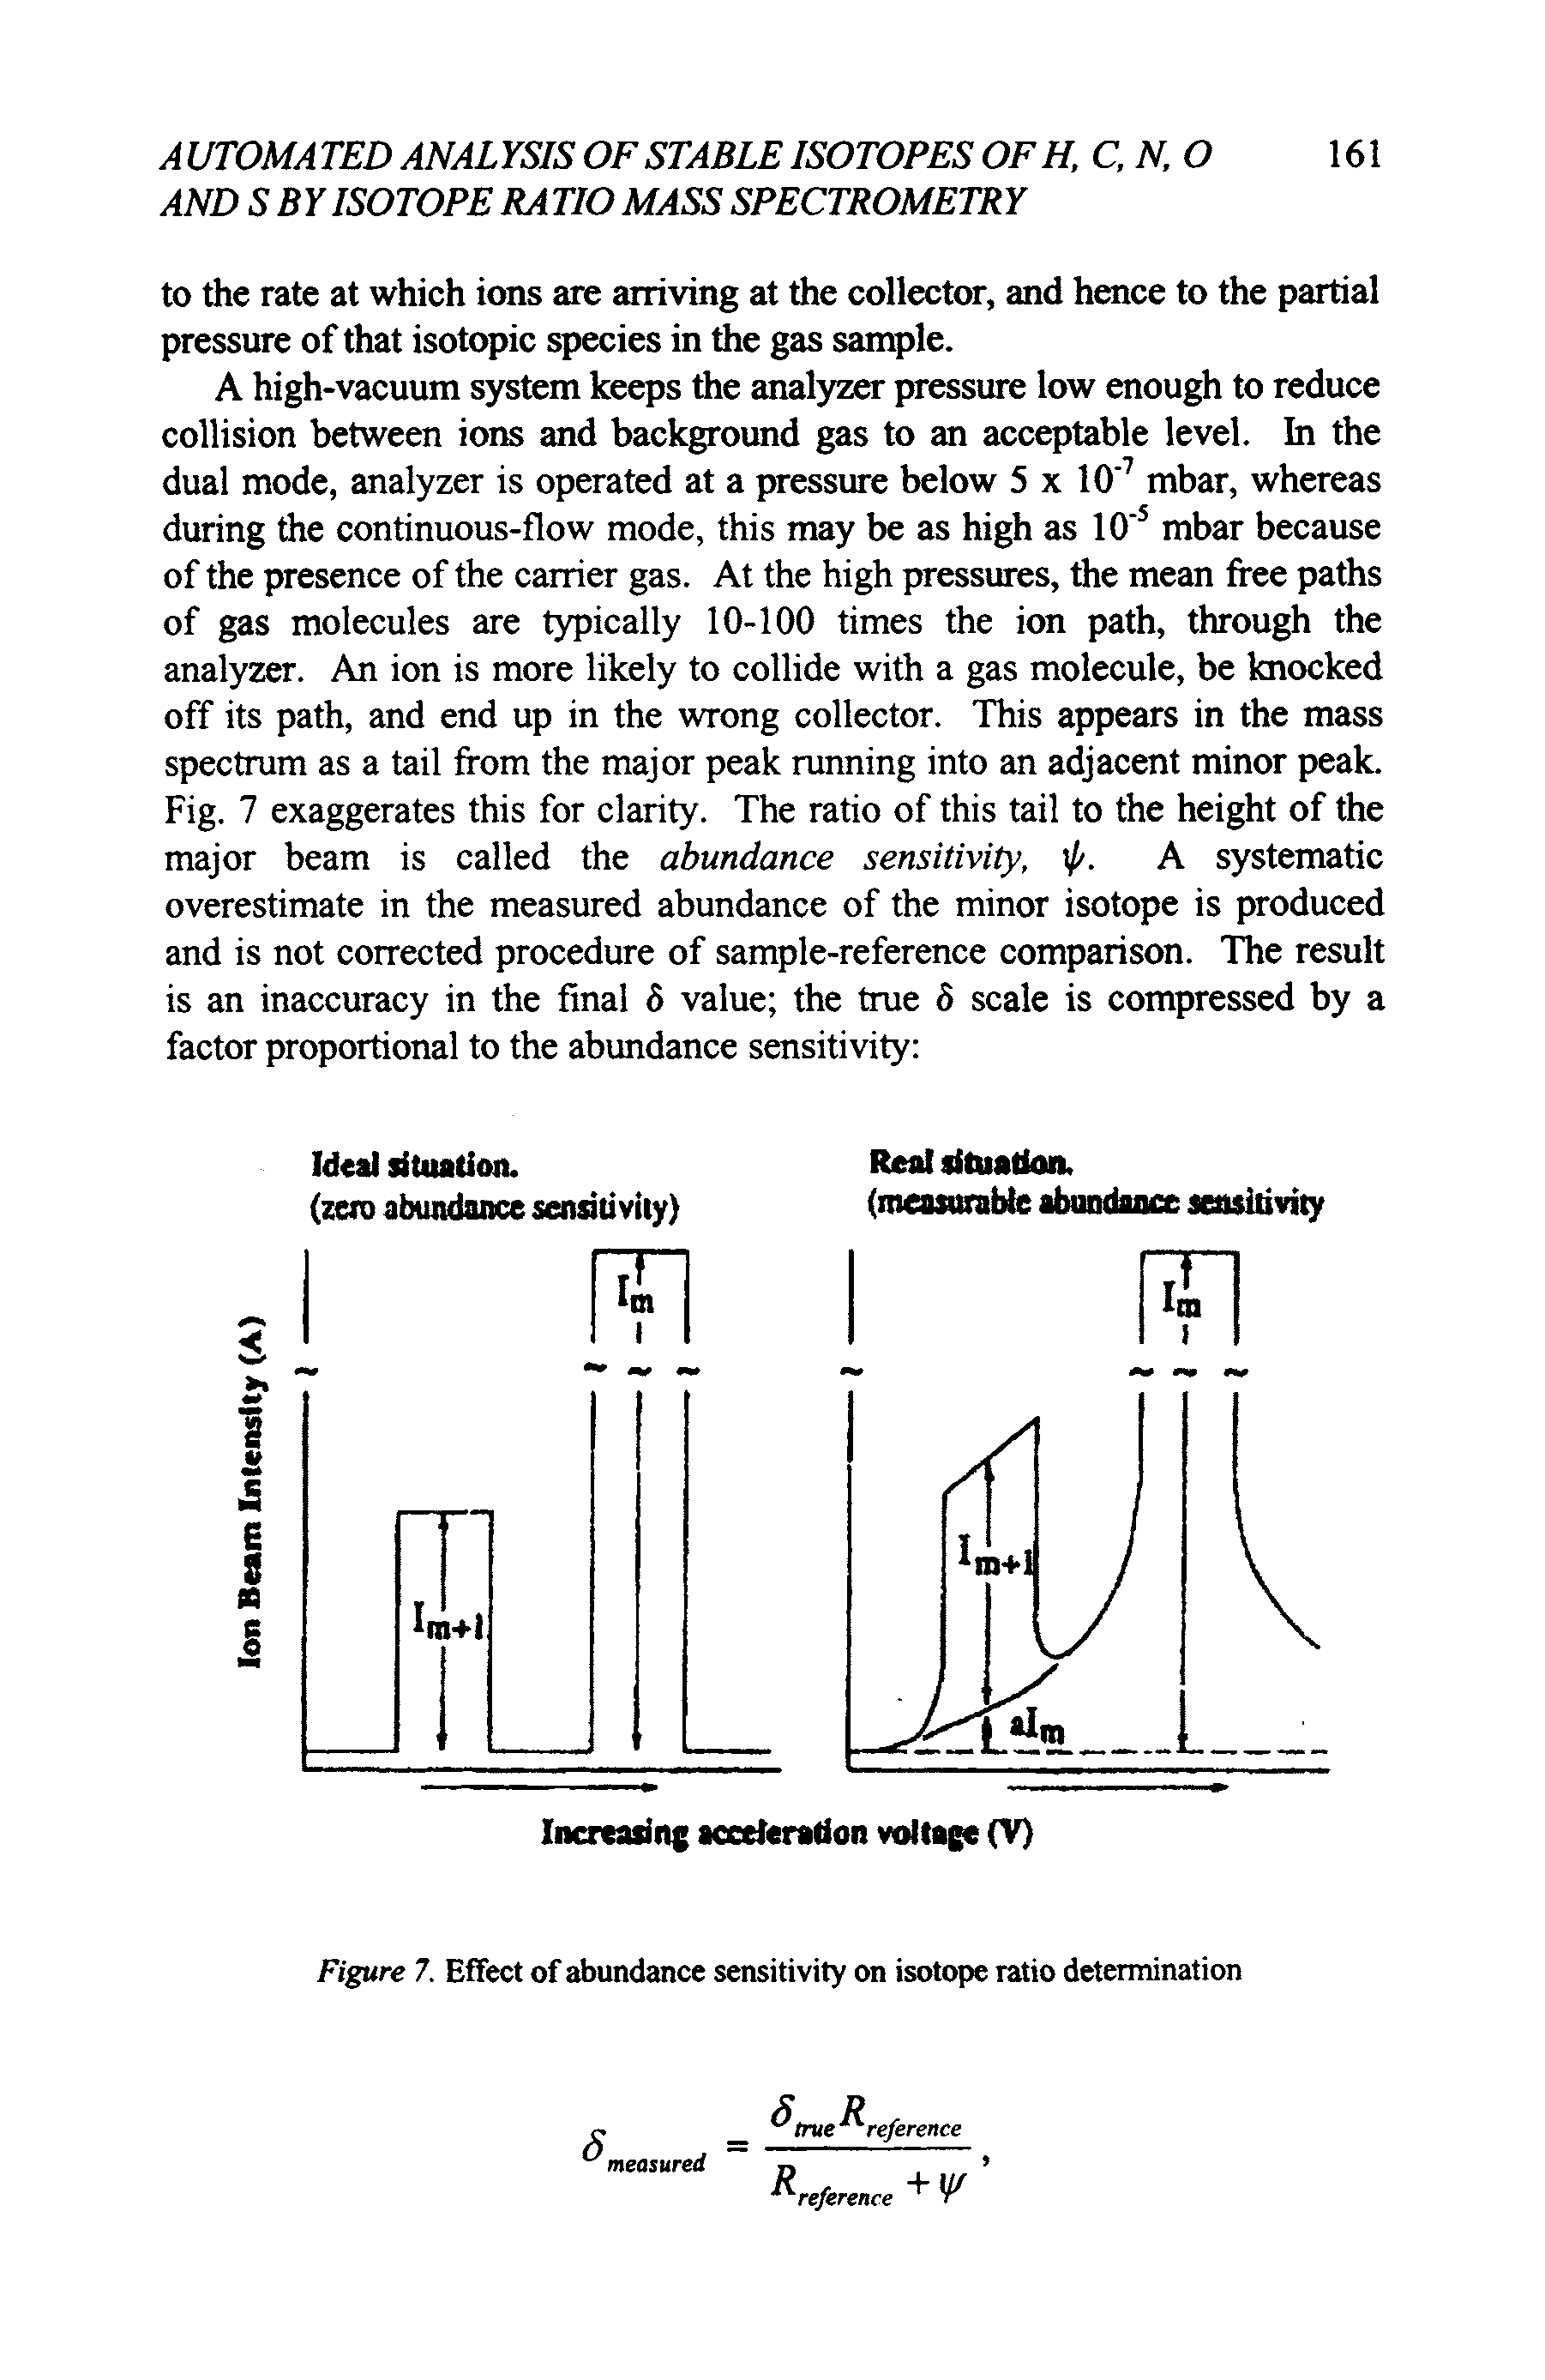 Figure 7. Effect of abundance sensitivity on isotope ratio determination...